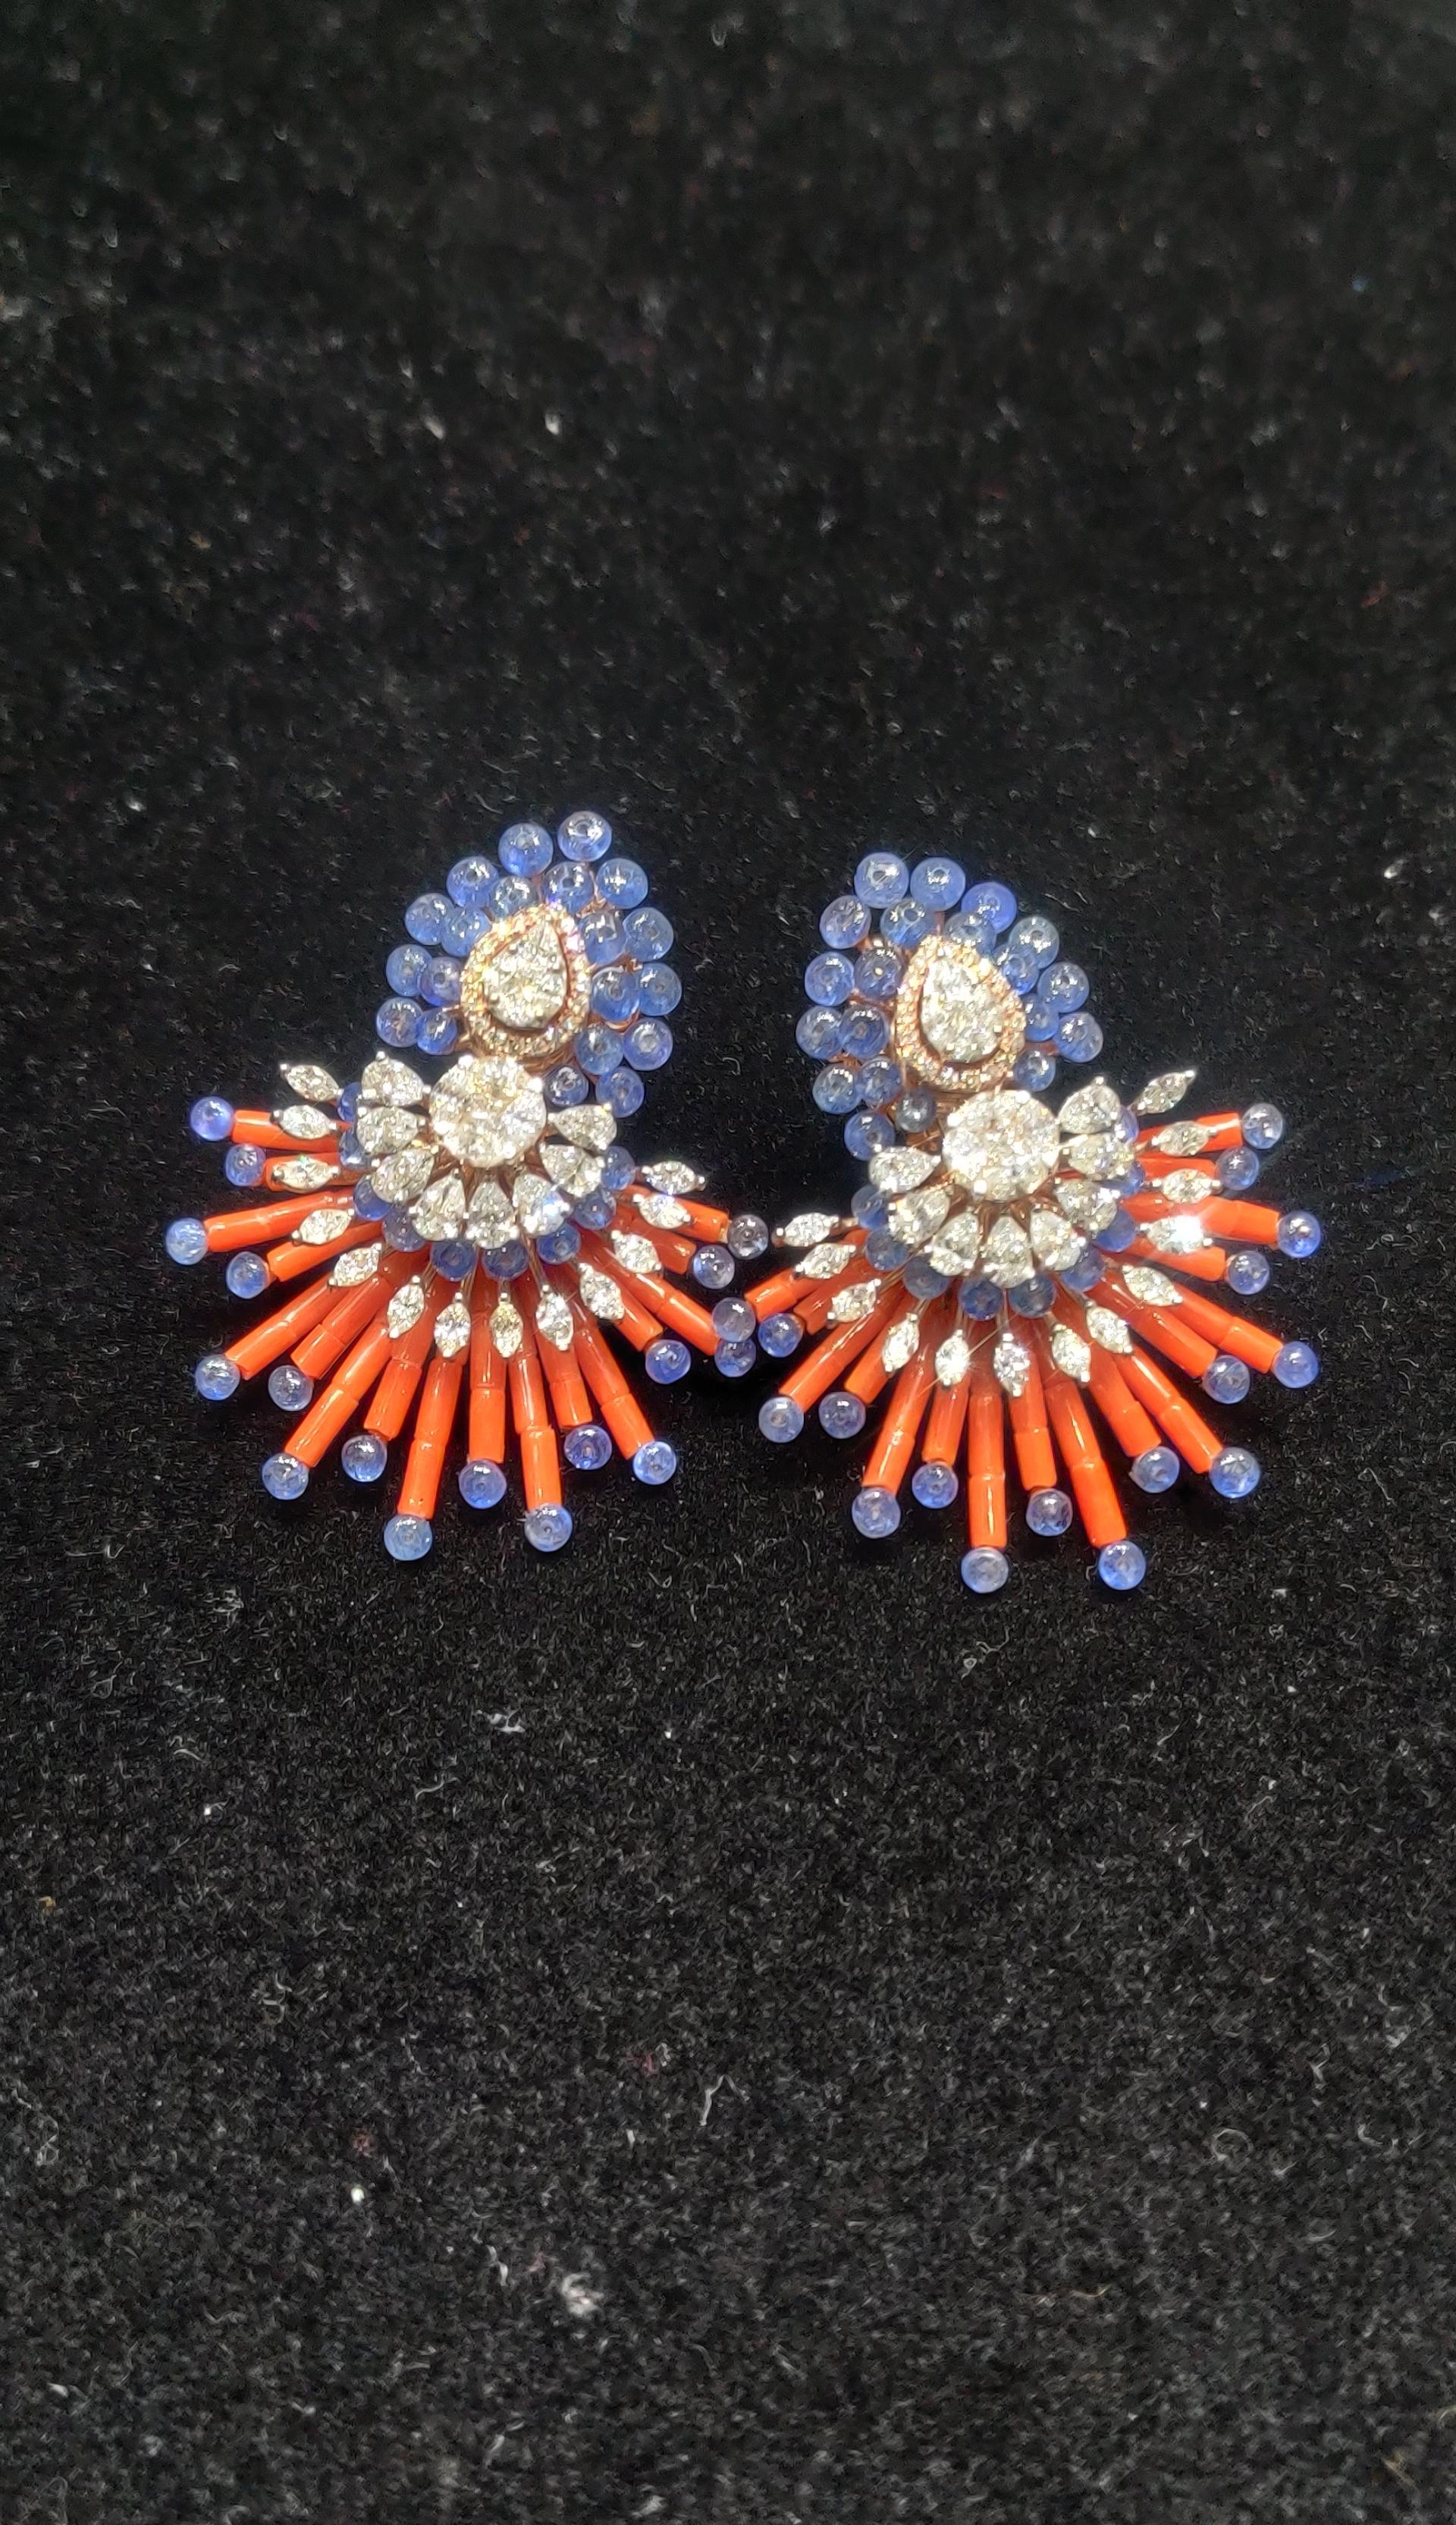 Mixed Cut 14 Karat Tanzanite Coral White Diamond Stud Earrings For Sale